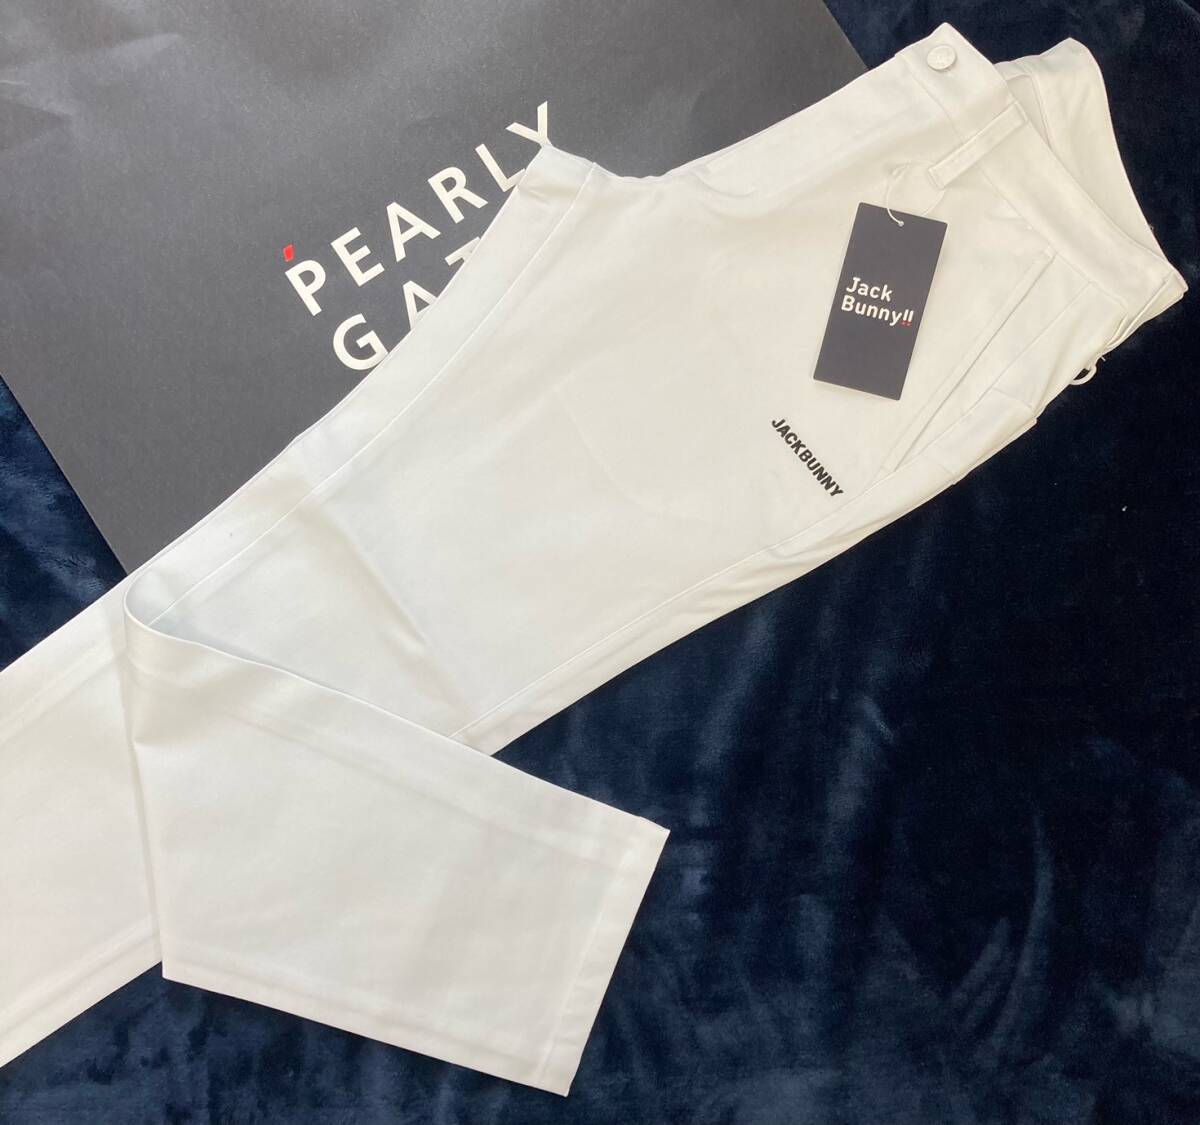  новый товар Pearly Gates Jack ba колено 2WAY стрейч брюки (4) размер M/ белый PEARLY GATES JACK BUNNY 2024 год последняя модель 